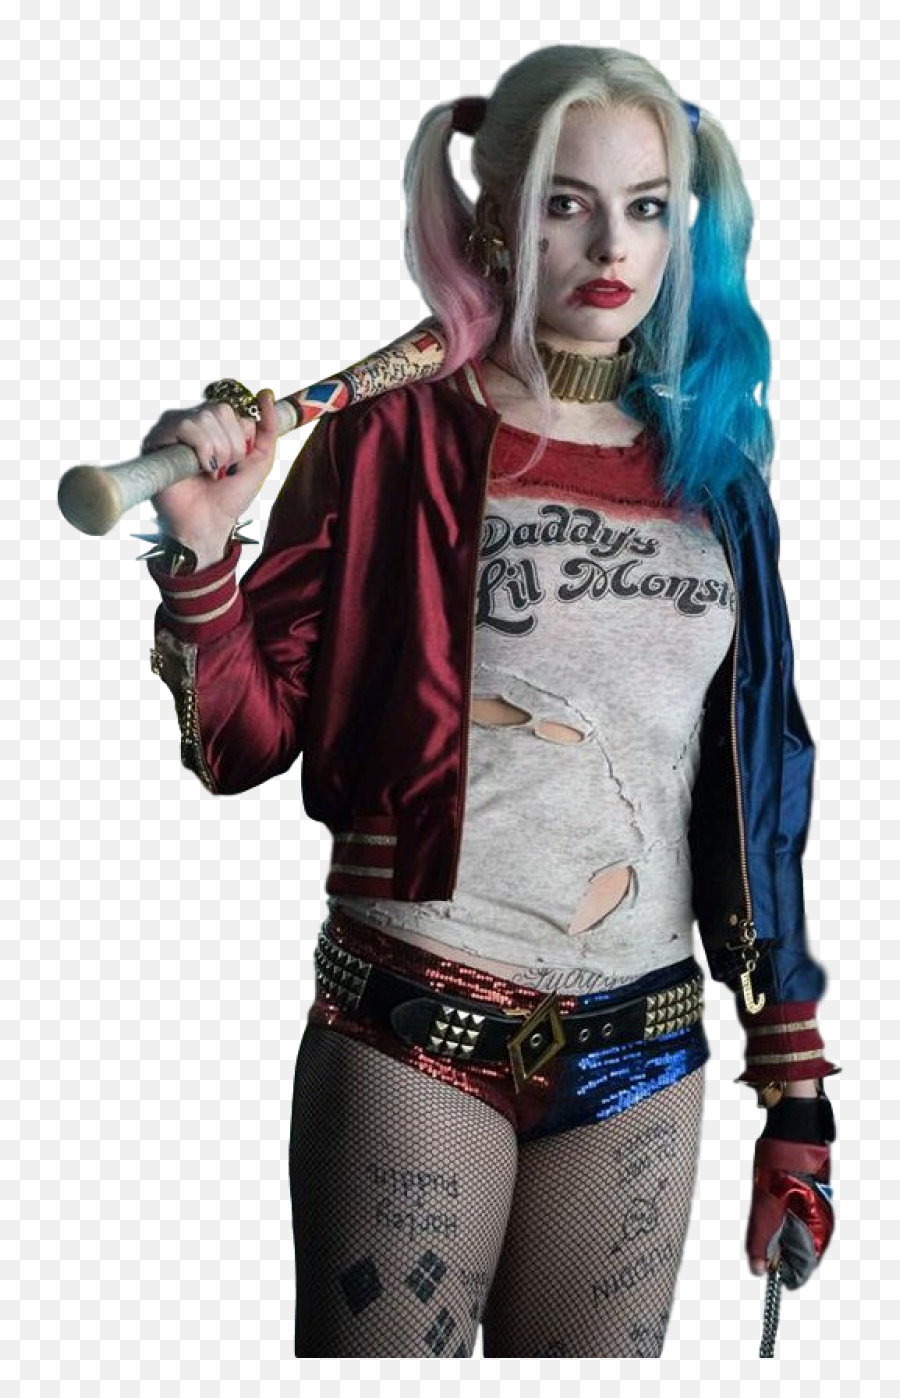 Harley Quinn Png Image Transparent